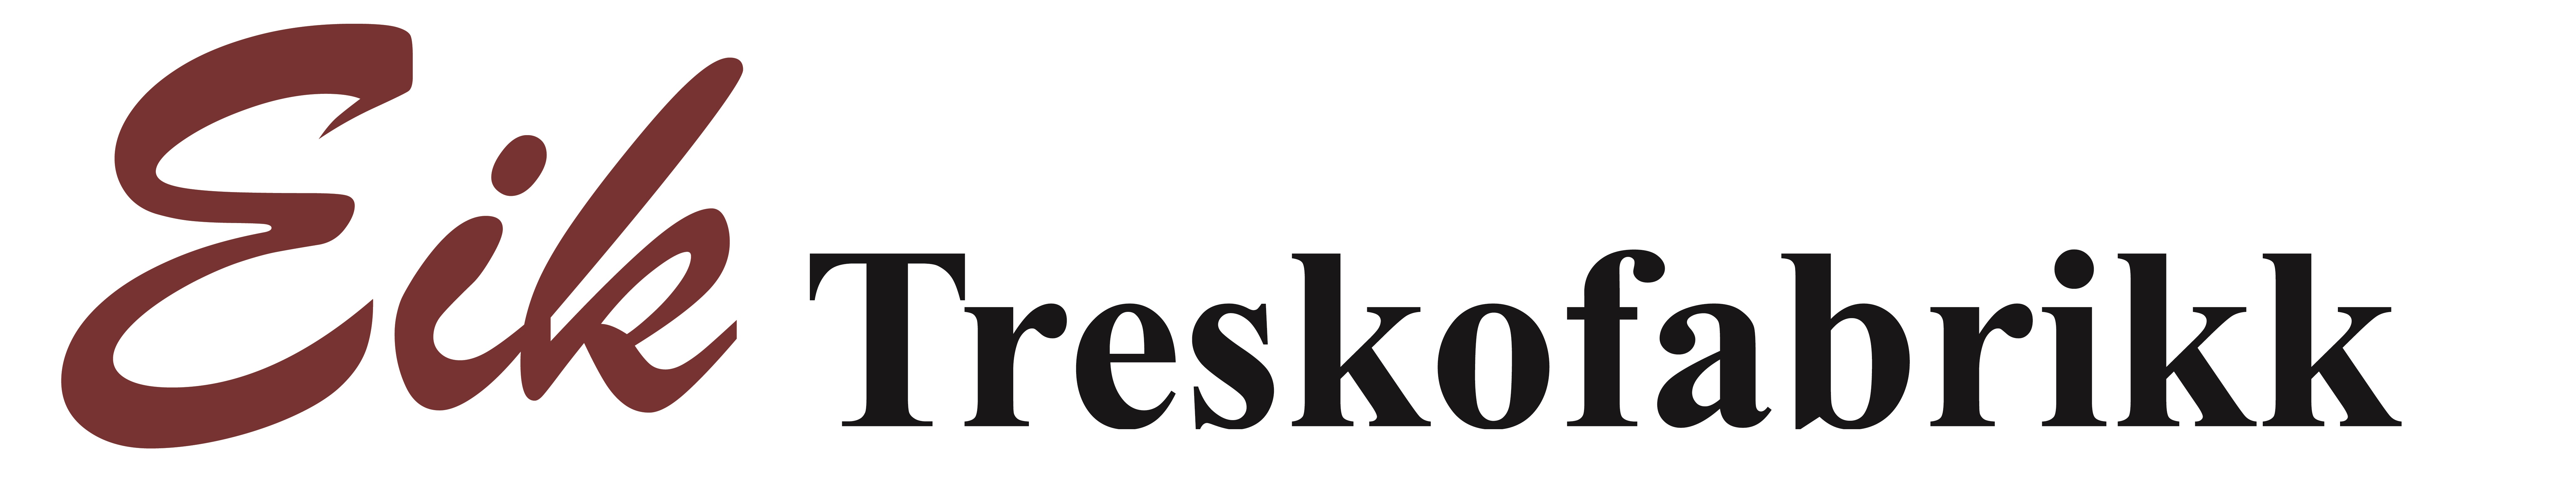 Eik Treskofabrikk Nettbutikk